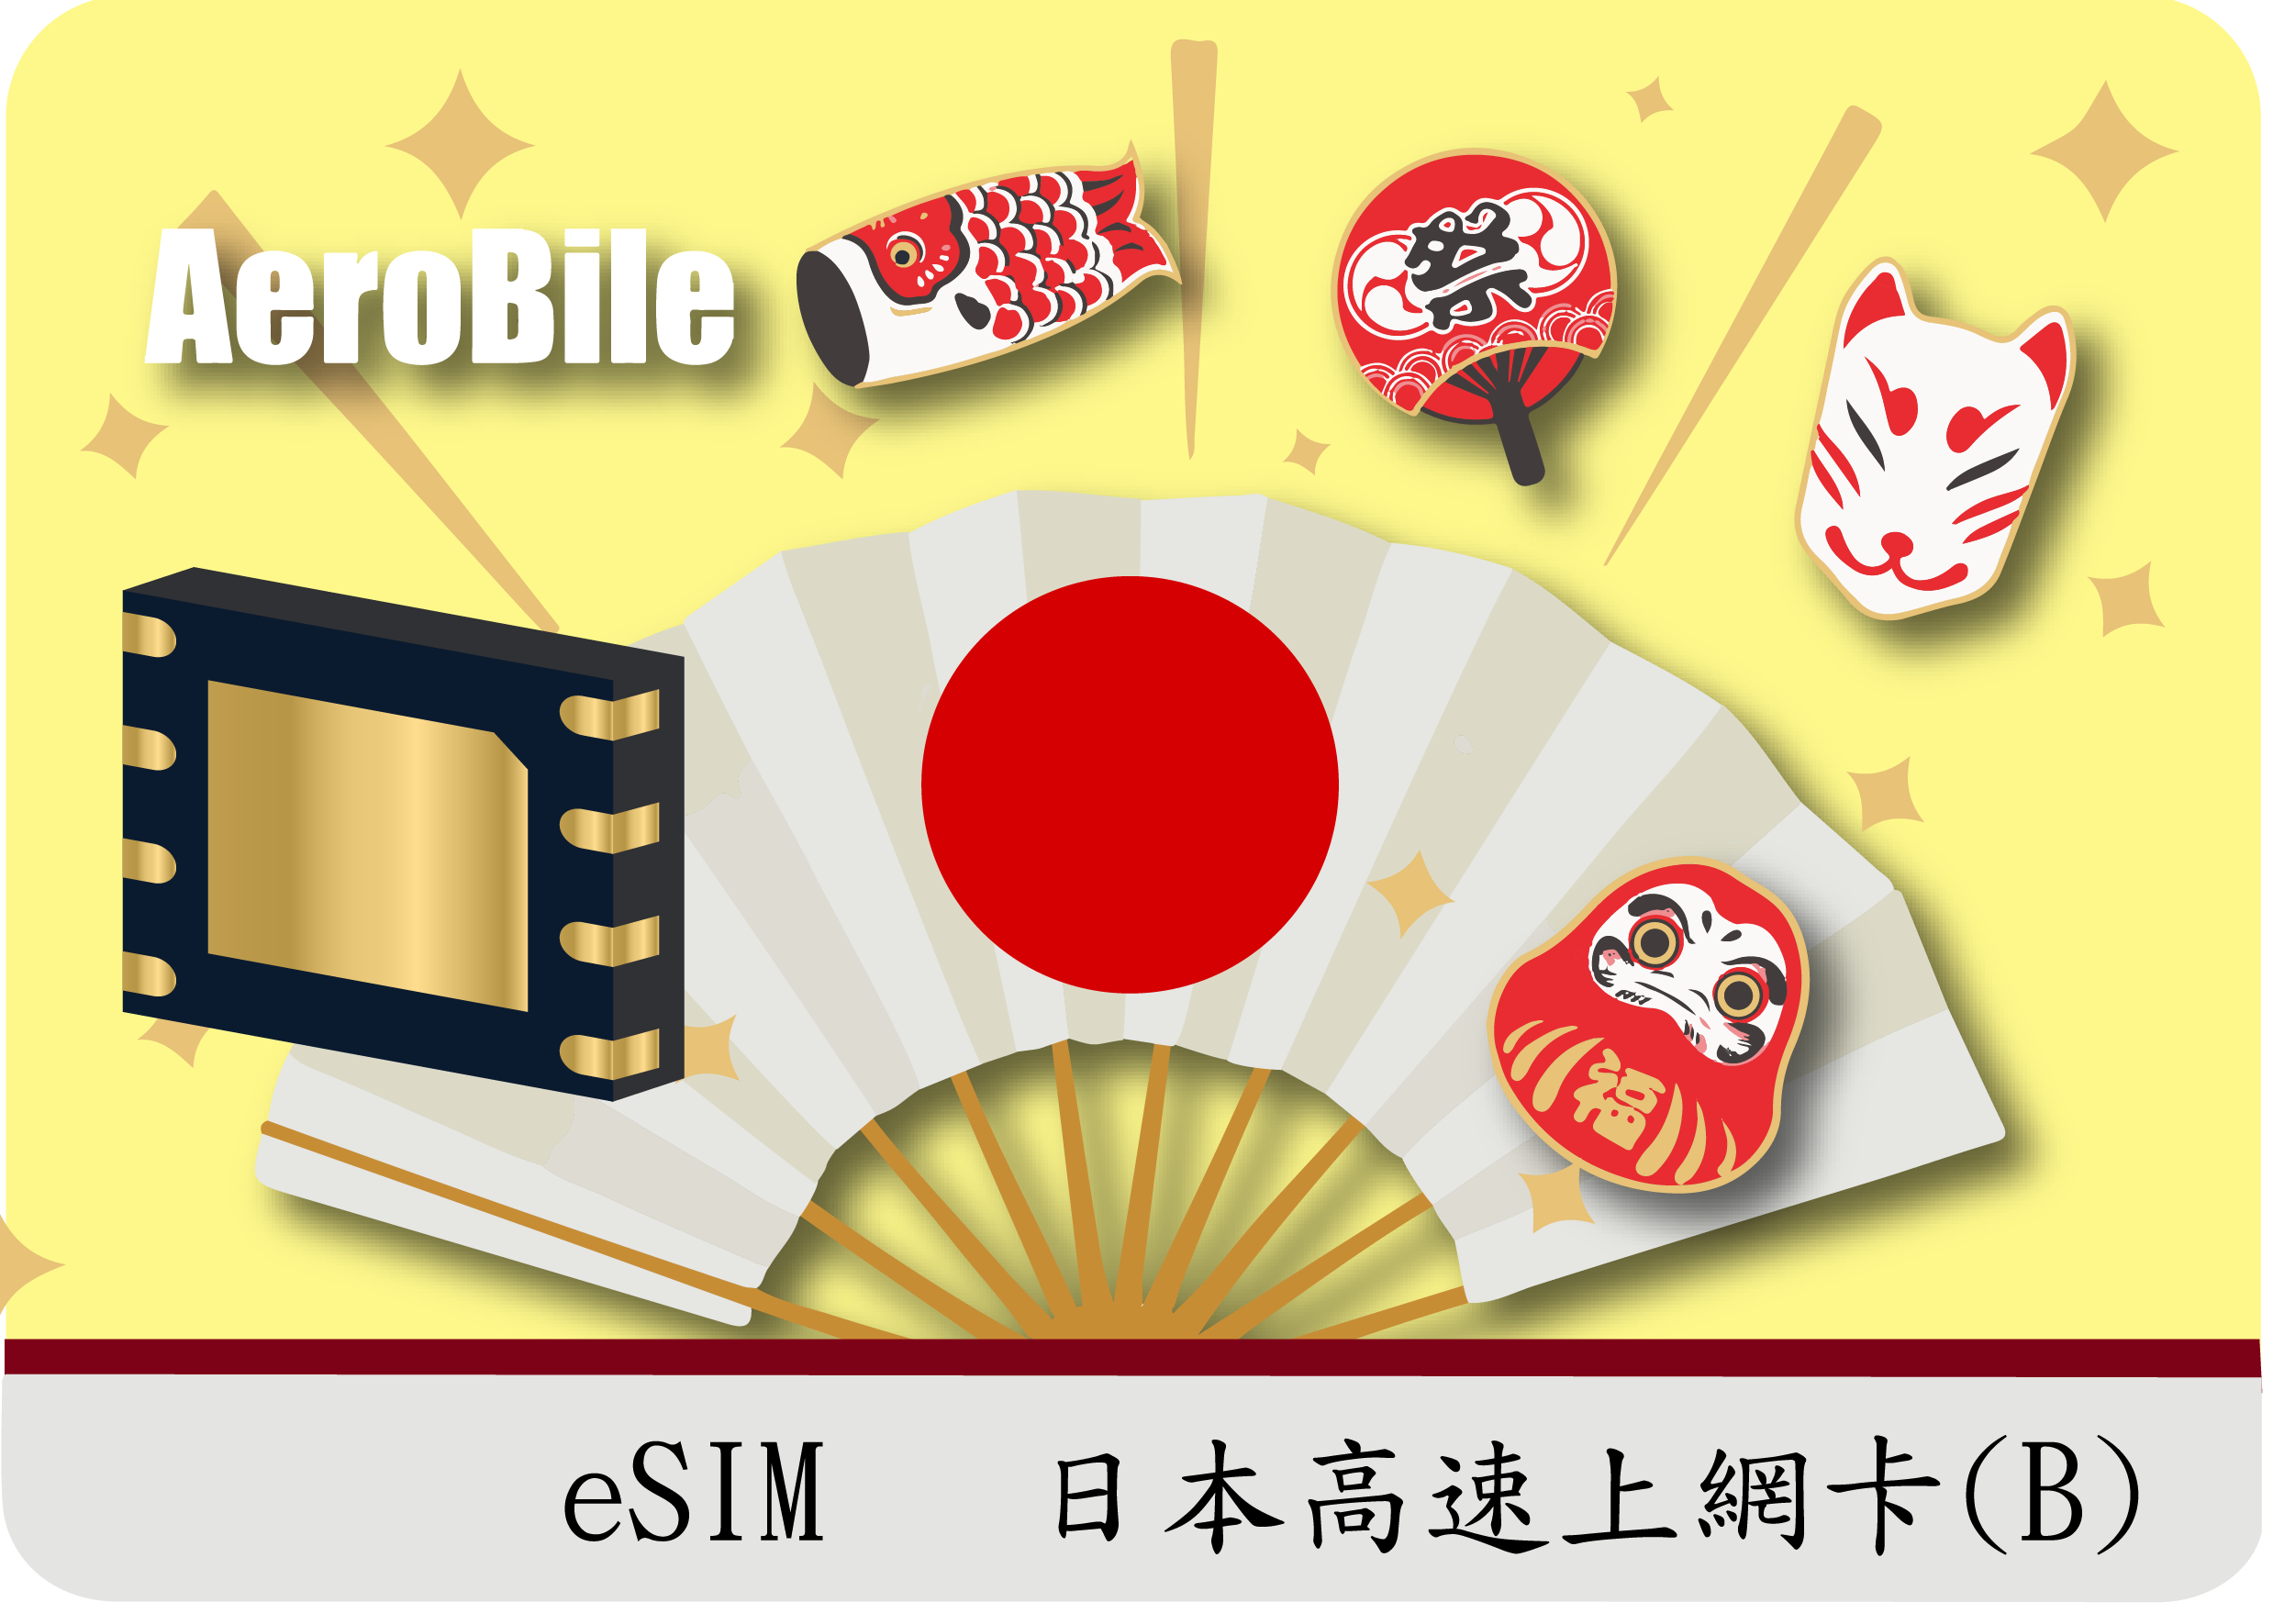 eSIM Japan 1GB per day